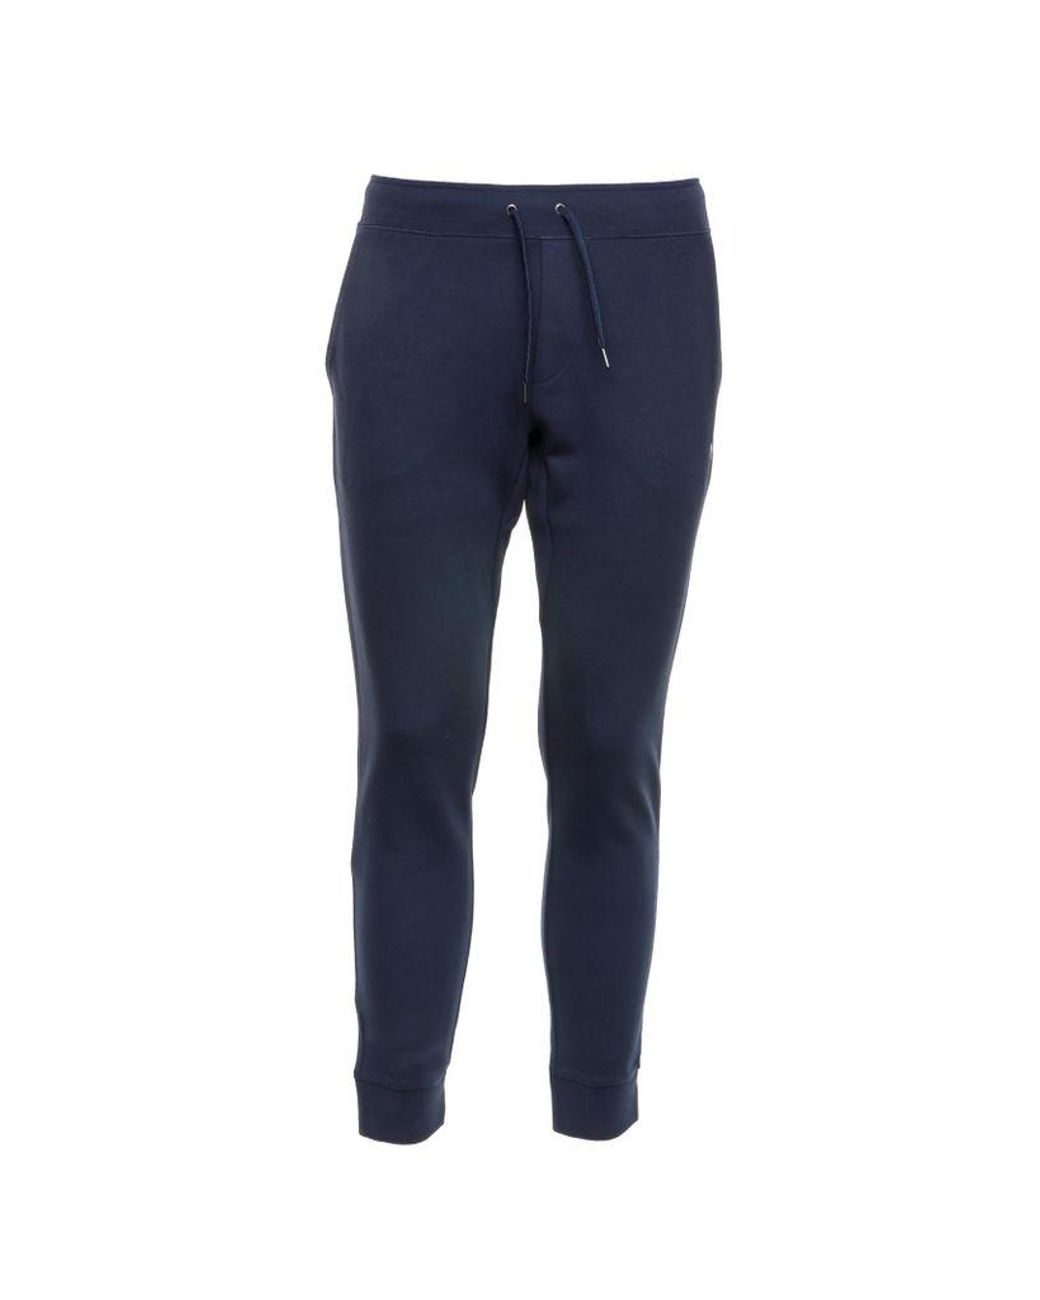 Polo Ralph Lauren Trousers in Blue for Men - Lyst